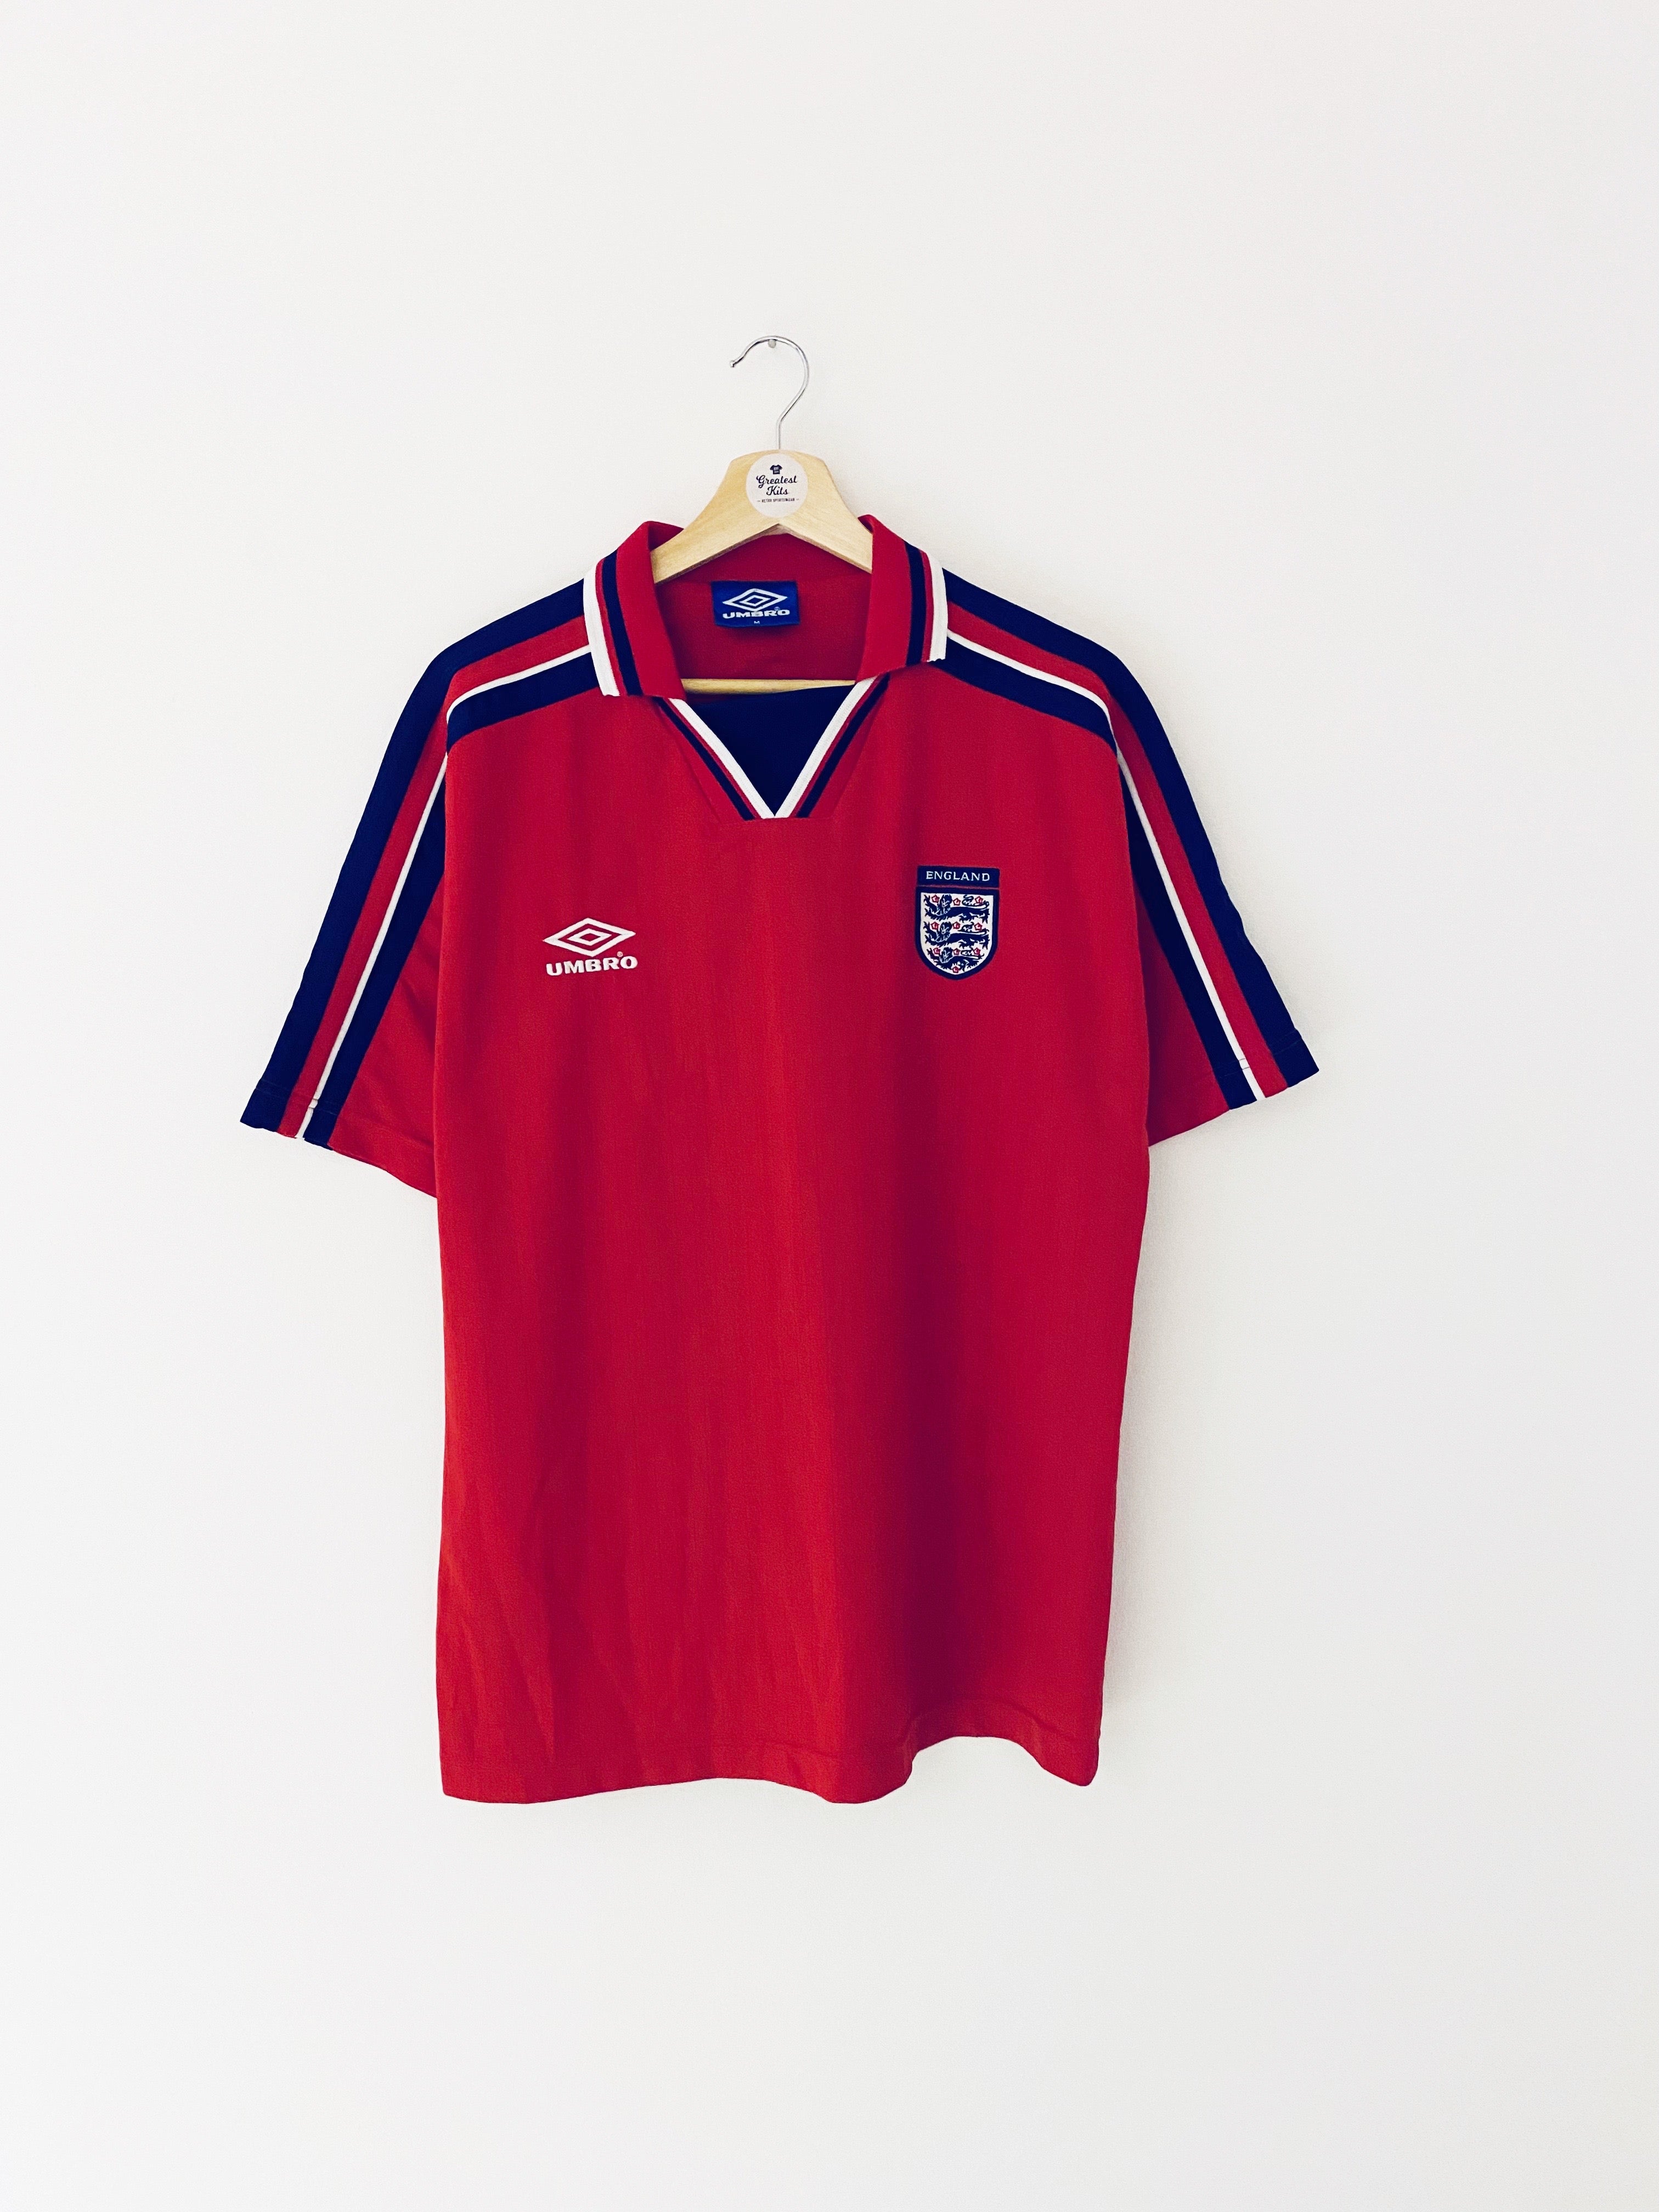 1998/99 England Training Shirt (M) 9/10